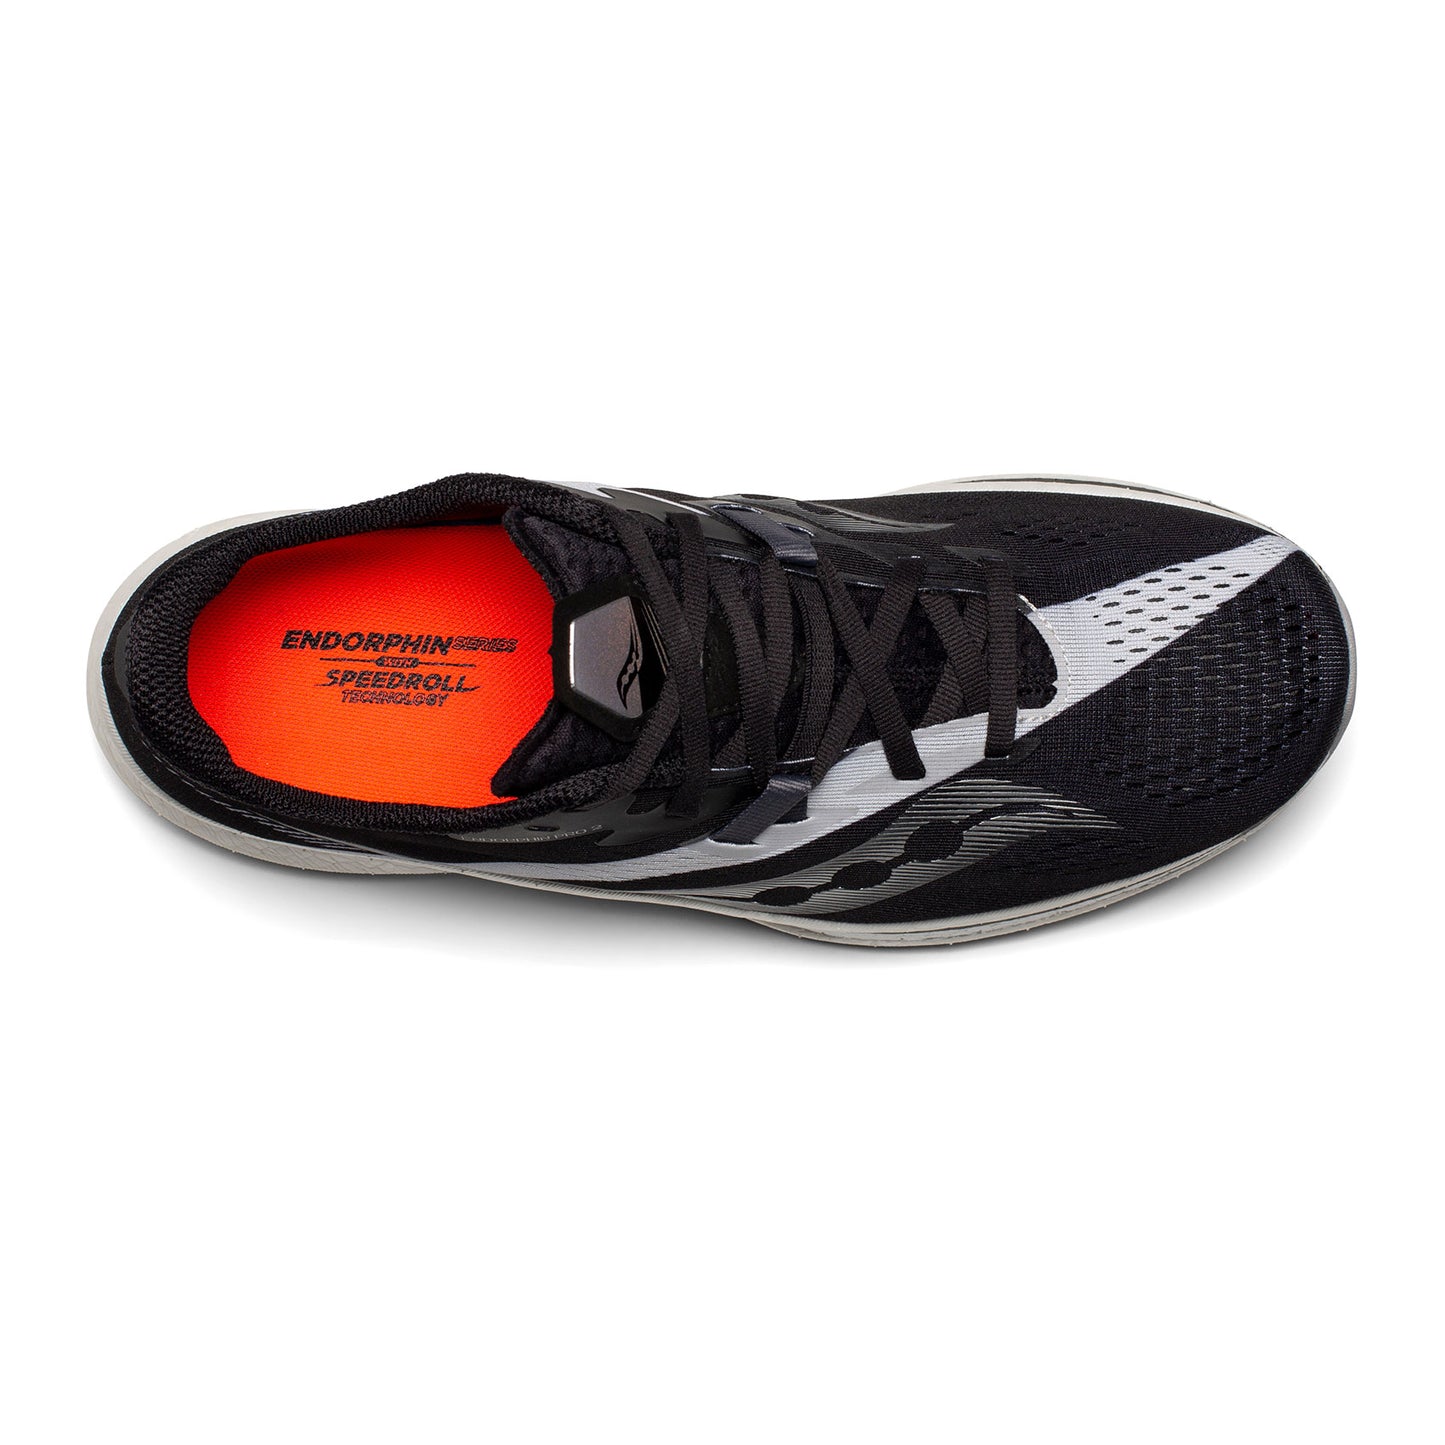 Men's Endorphin Pro 2 Racing Shoe - Black/White - Regular (D)